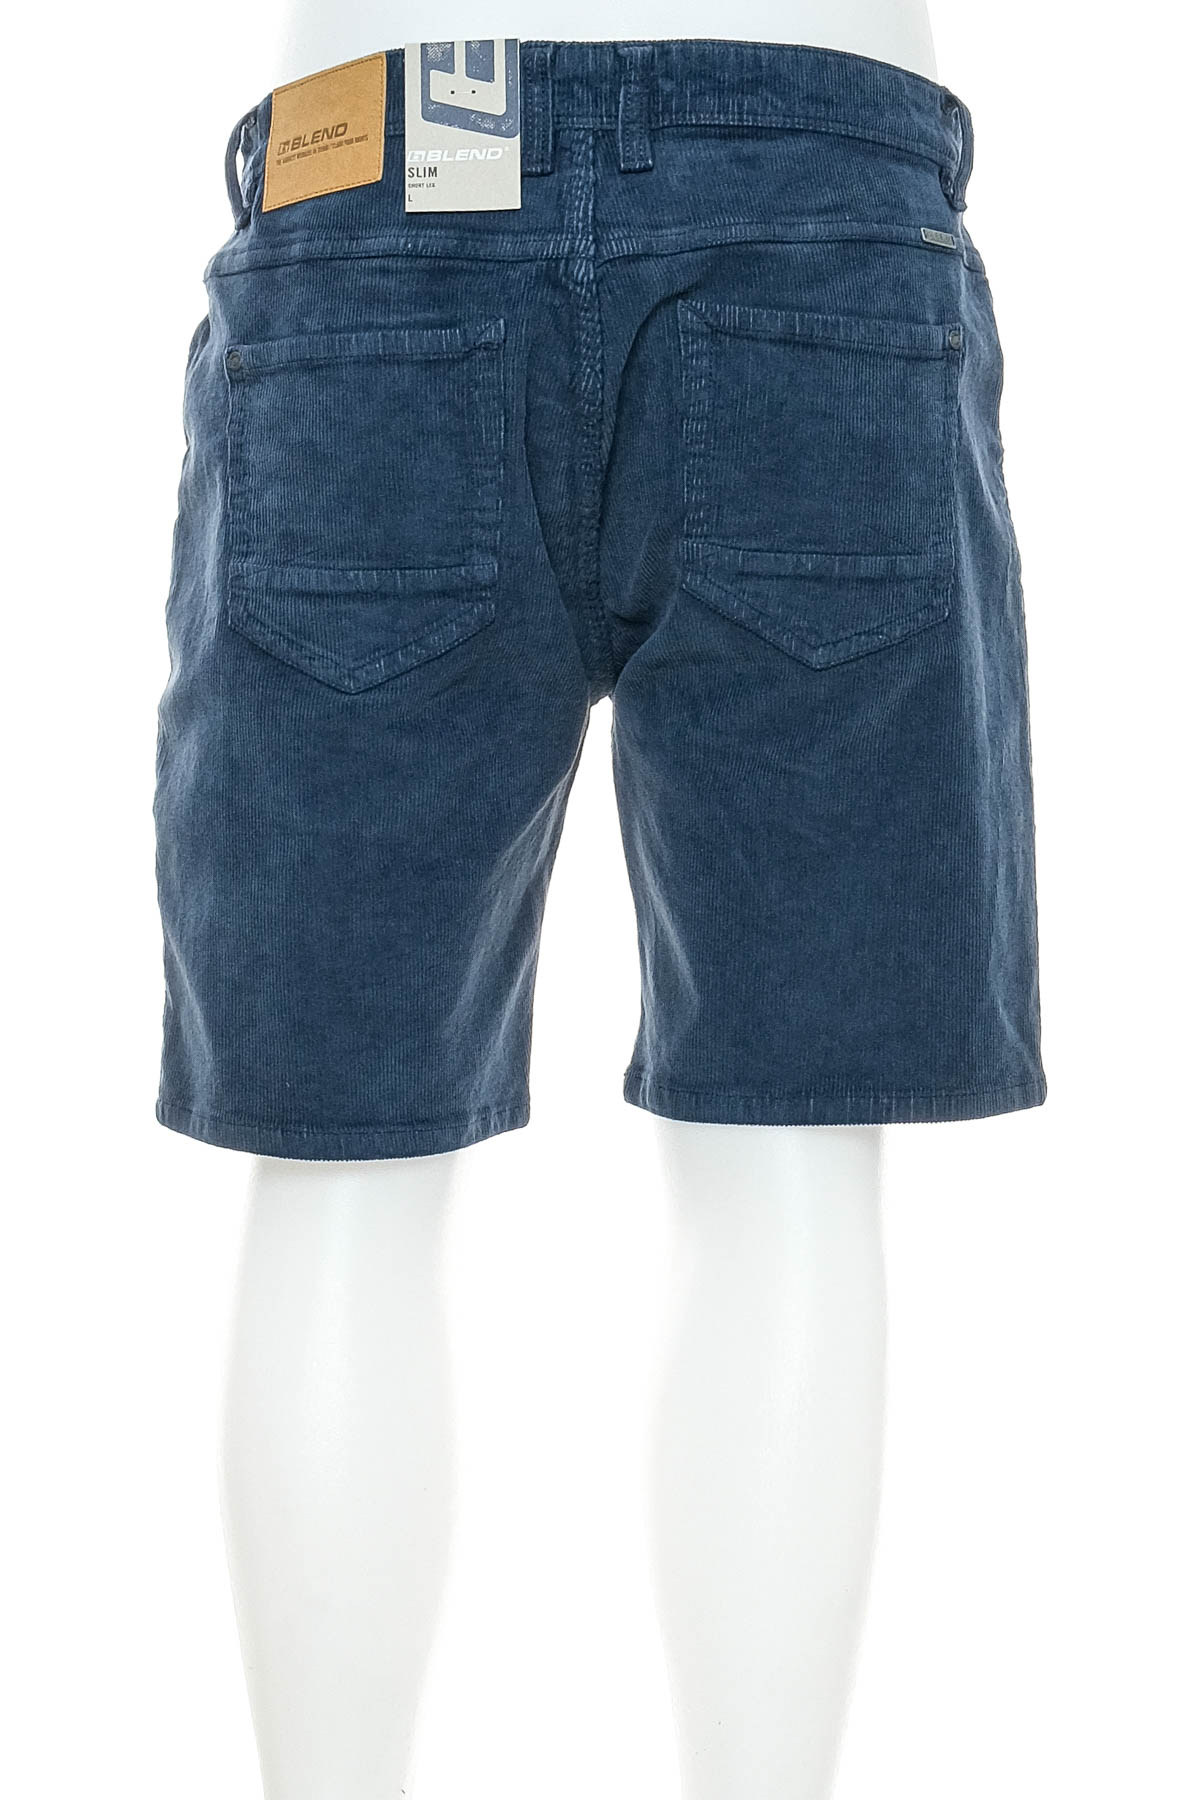 Men's shorts - Blend - 1